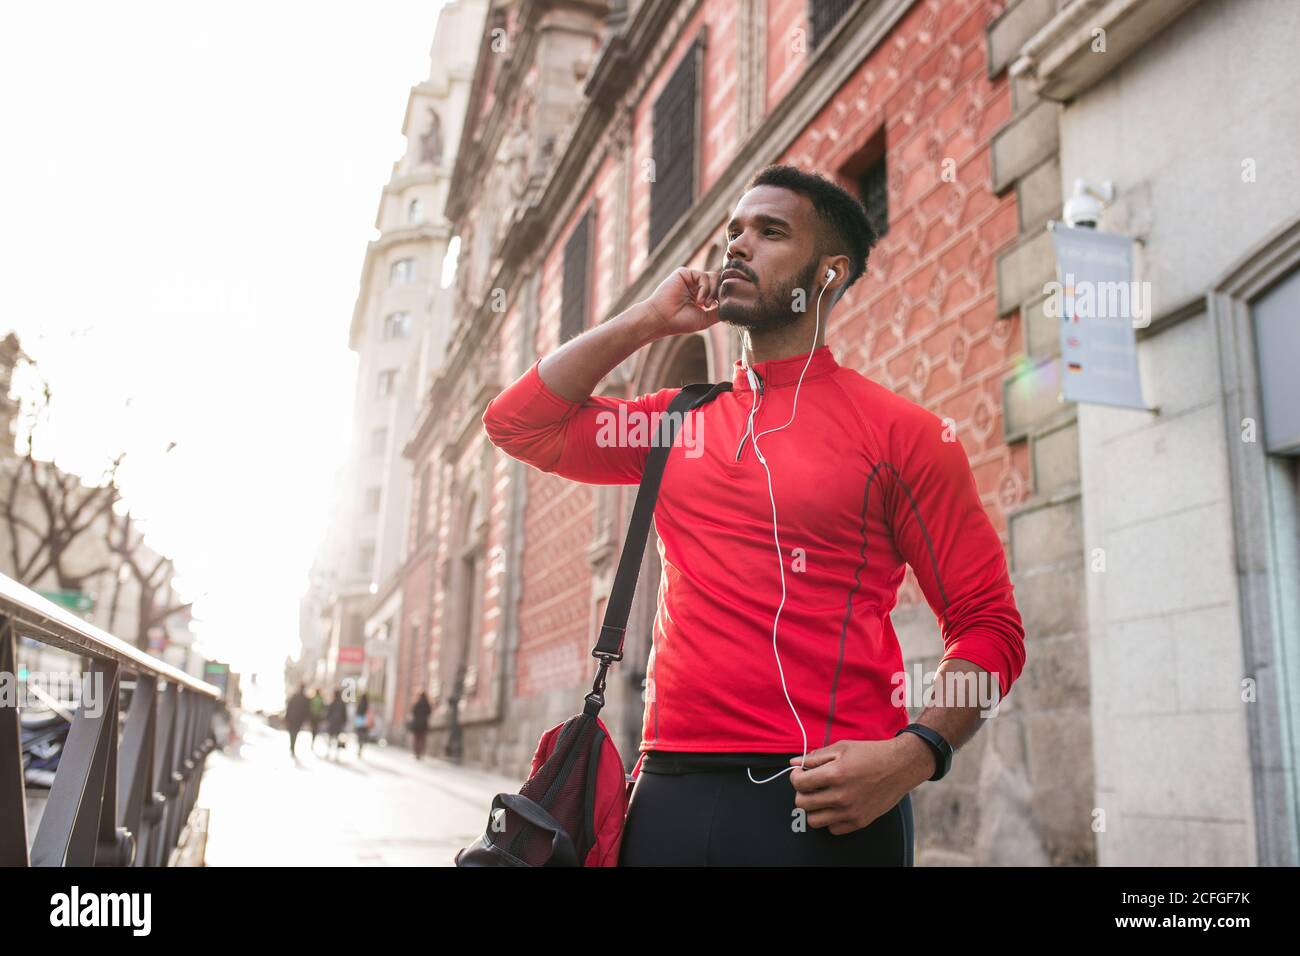 Young man around the city adjusting earphones Stock Photo